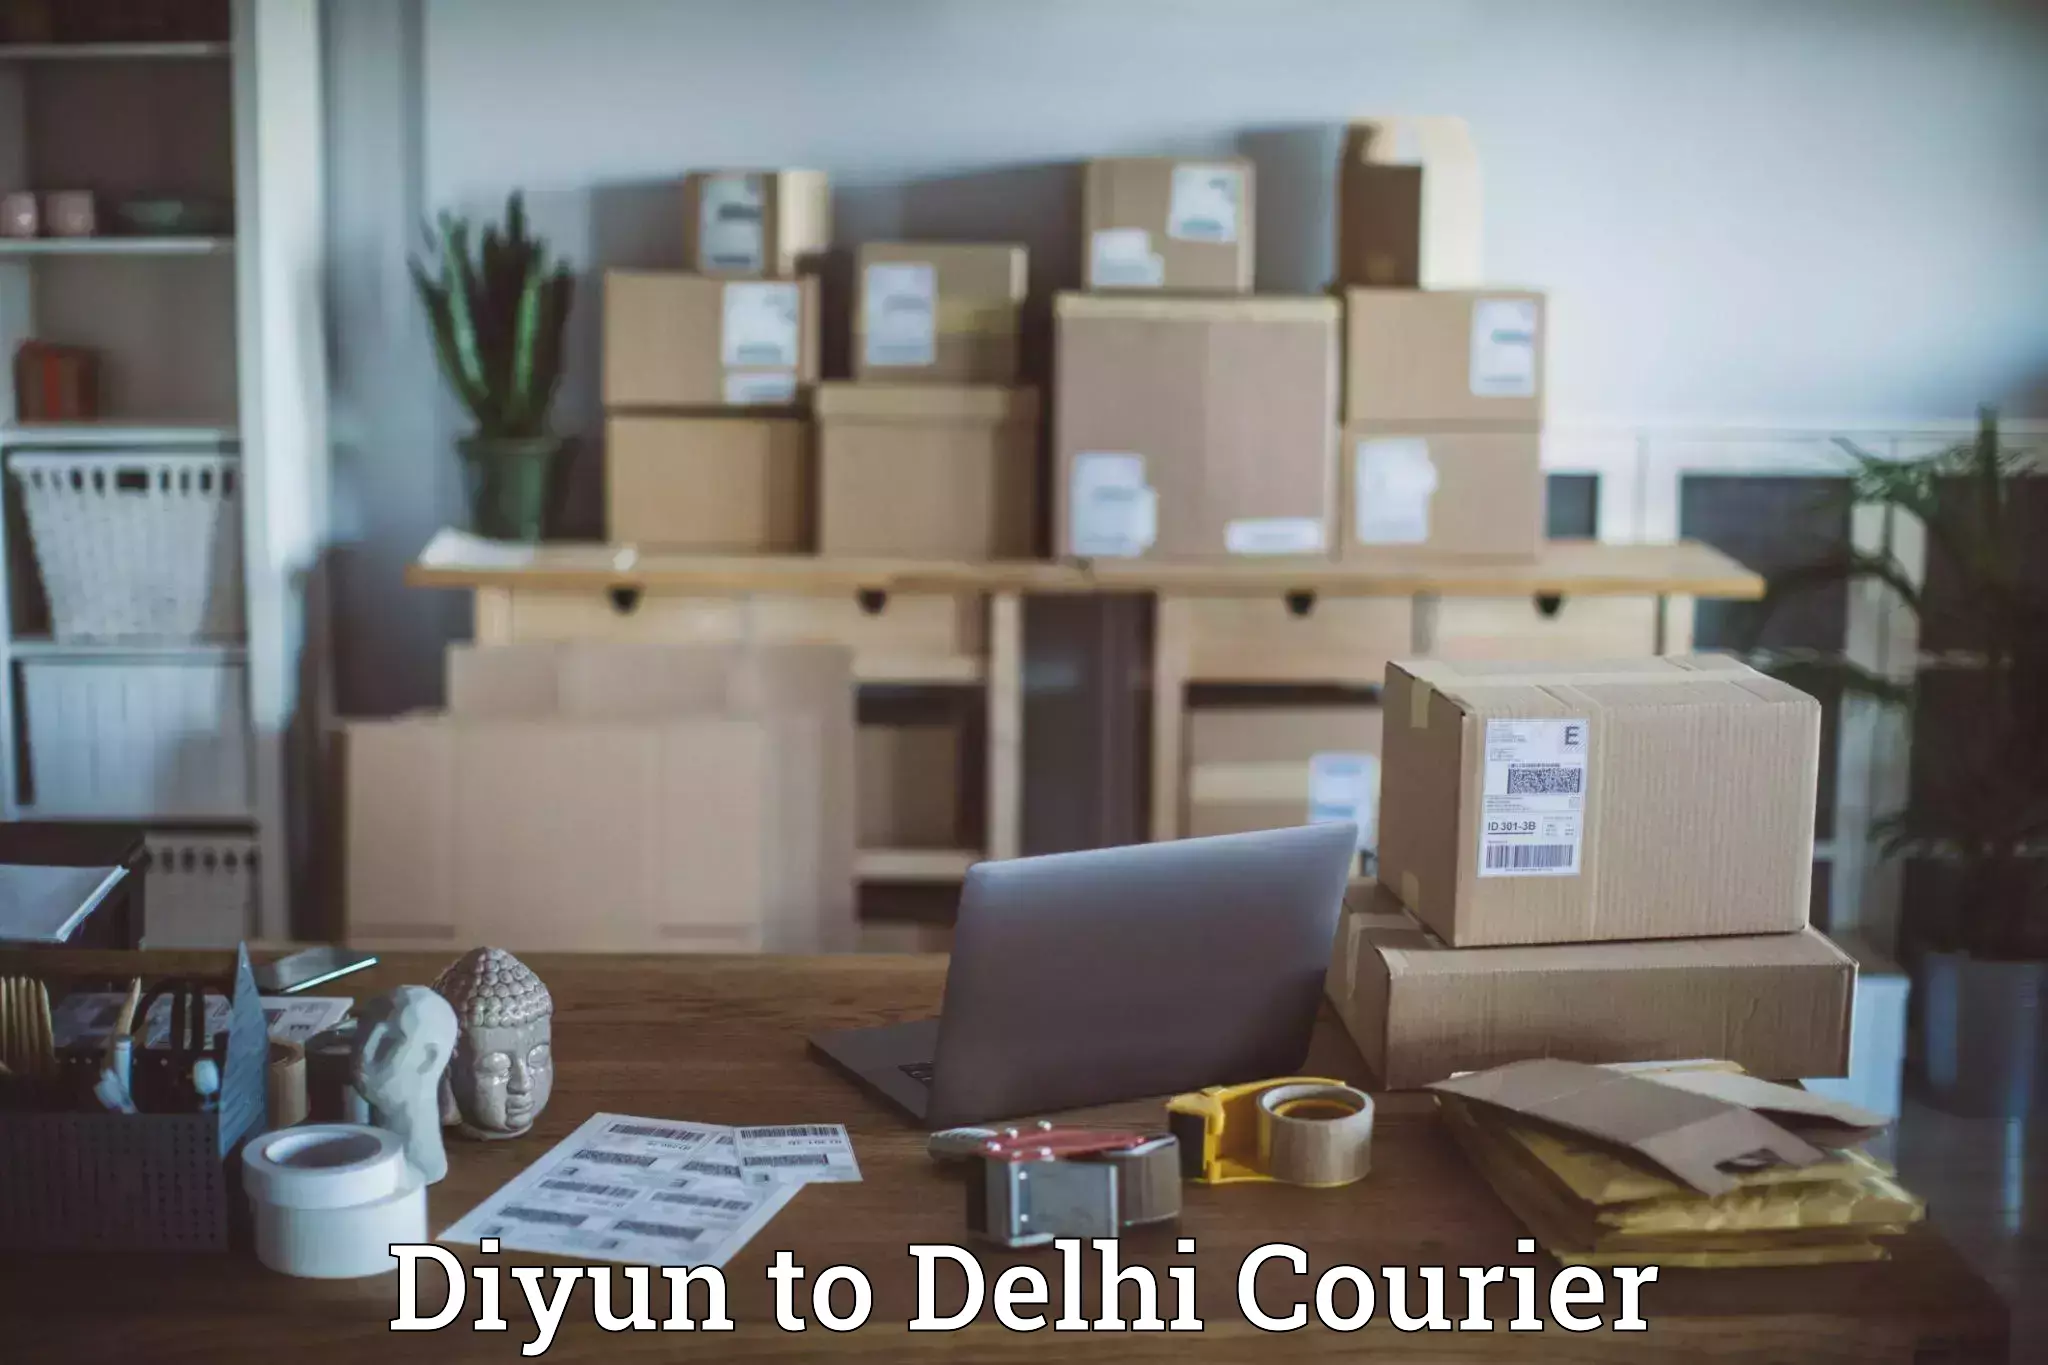 Holiday shipping services Diyun to Delhi